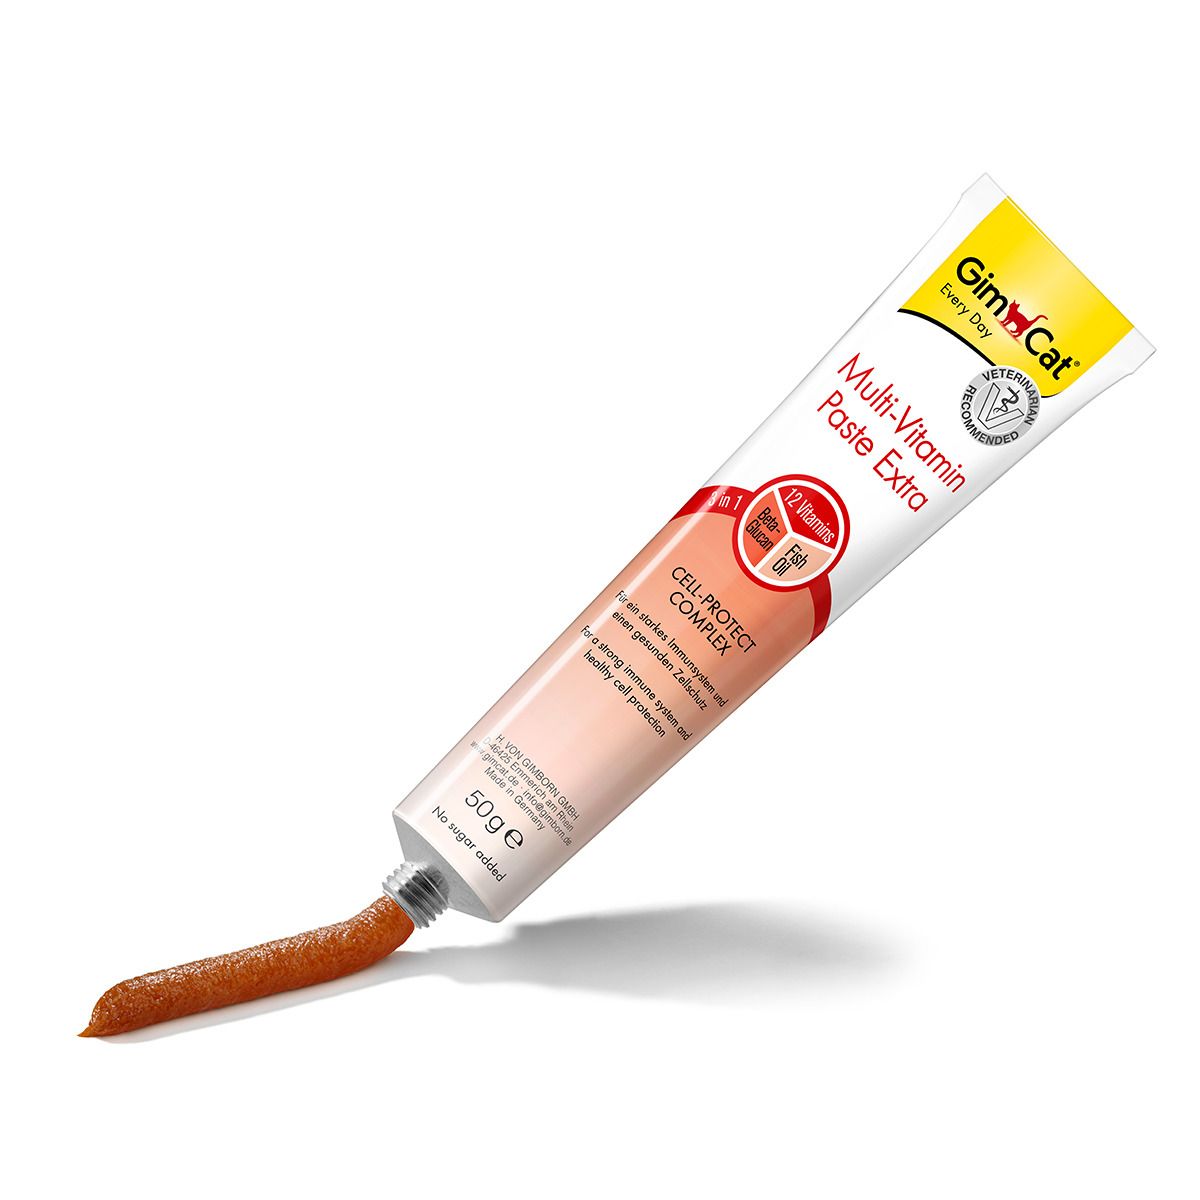 GimCat® Multi-Vitamin Paste Extra